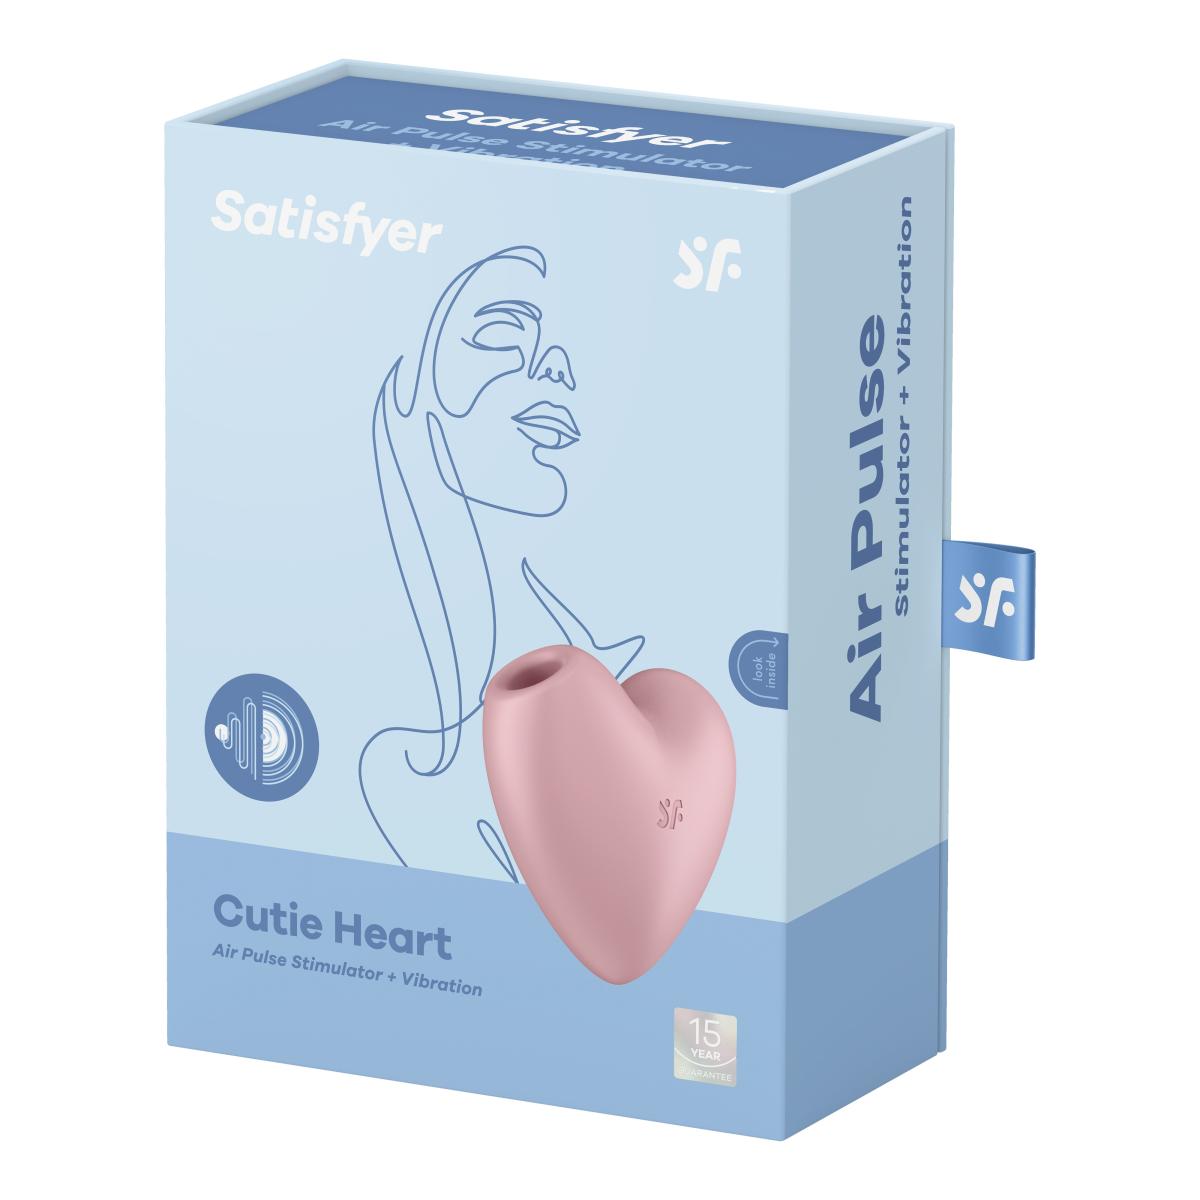 Satisfyer - Cutie Heart - Air Pulse Vibrator